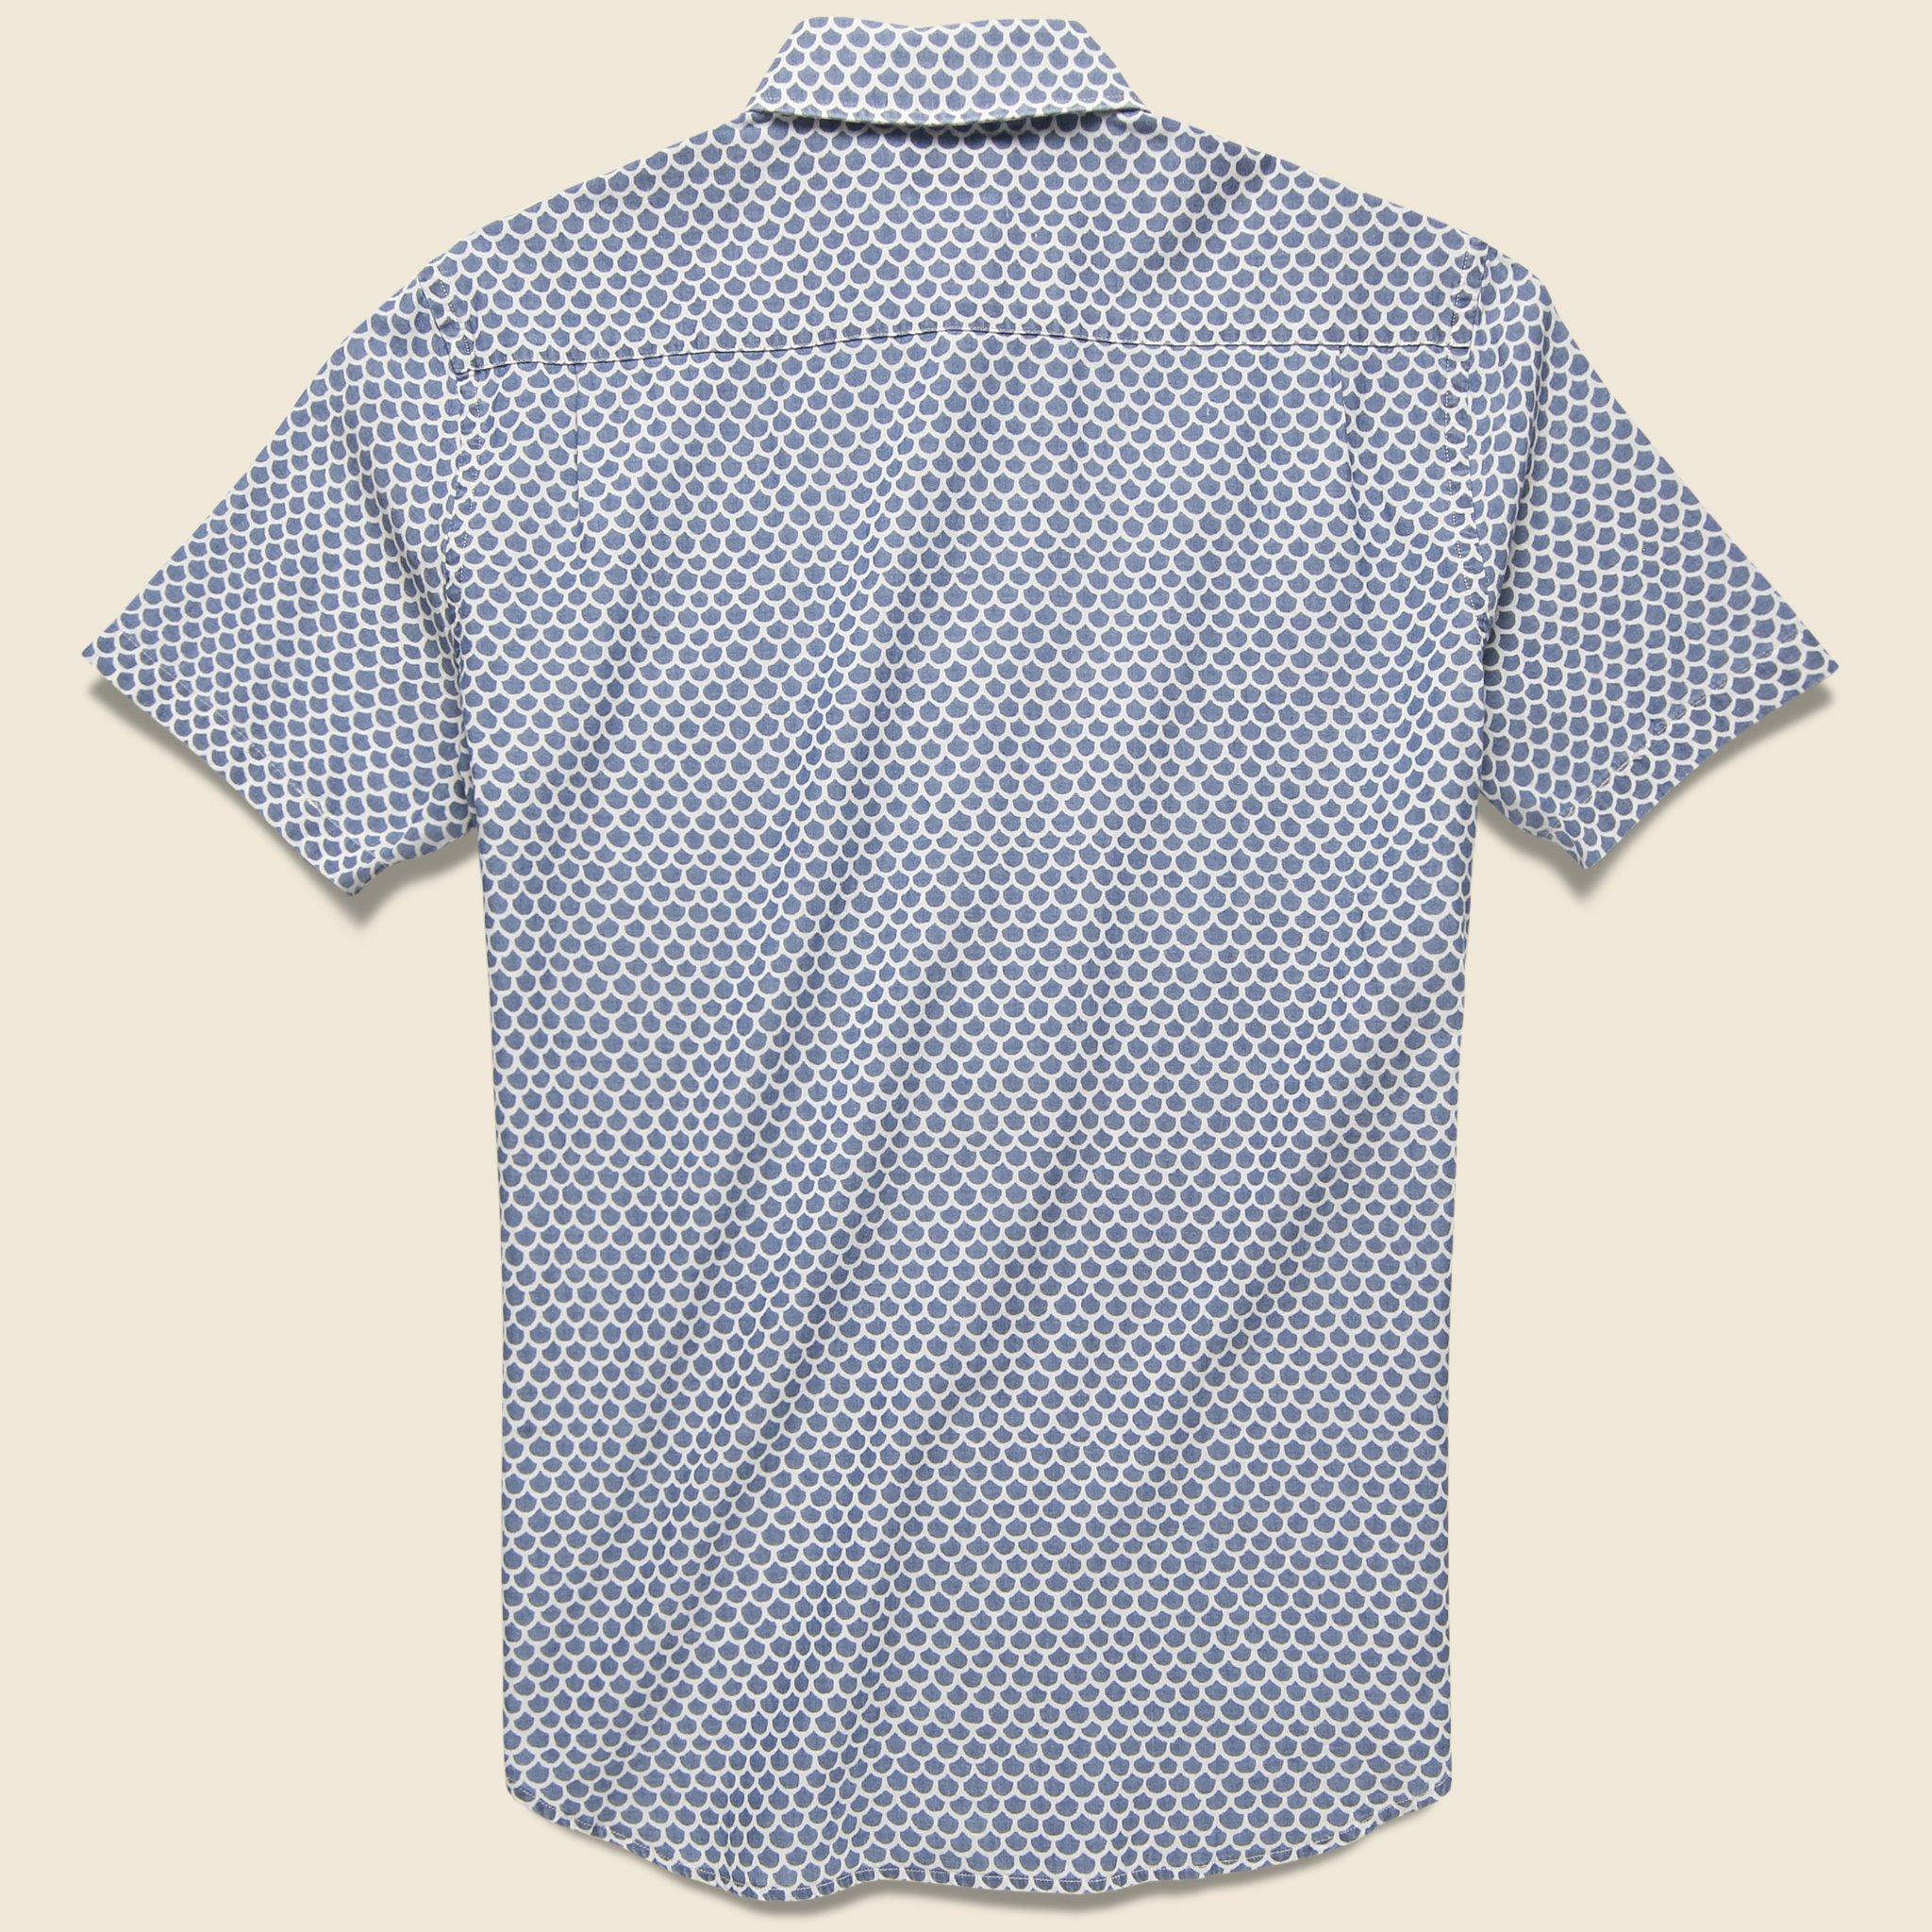 GenericMen Floral Print Slim Fit Shirt Long Sleeve Casual Button Down Shirt 